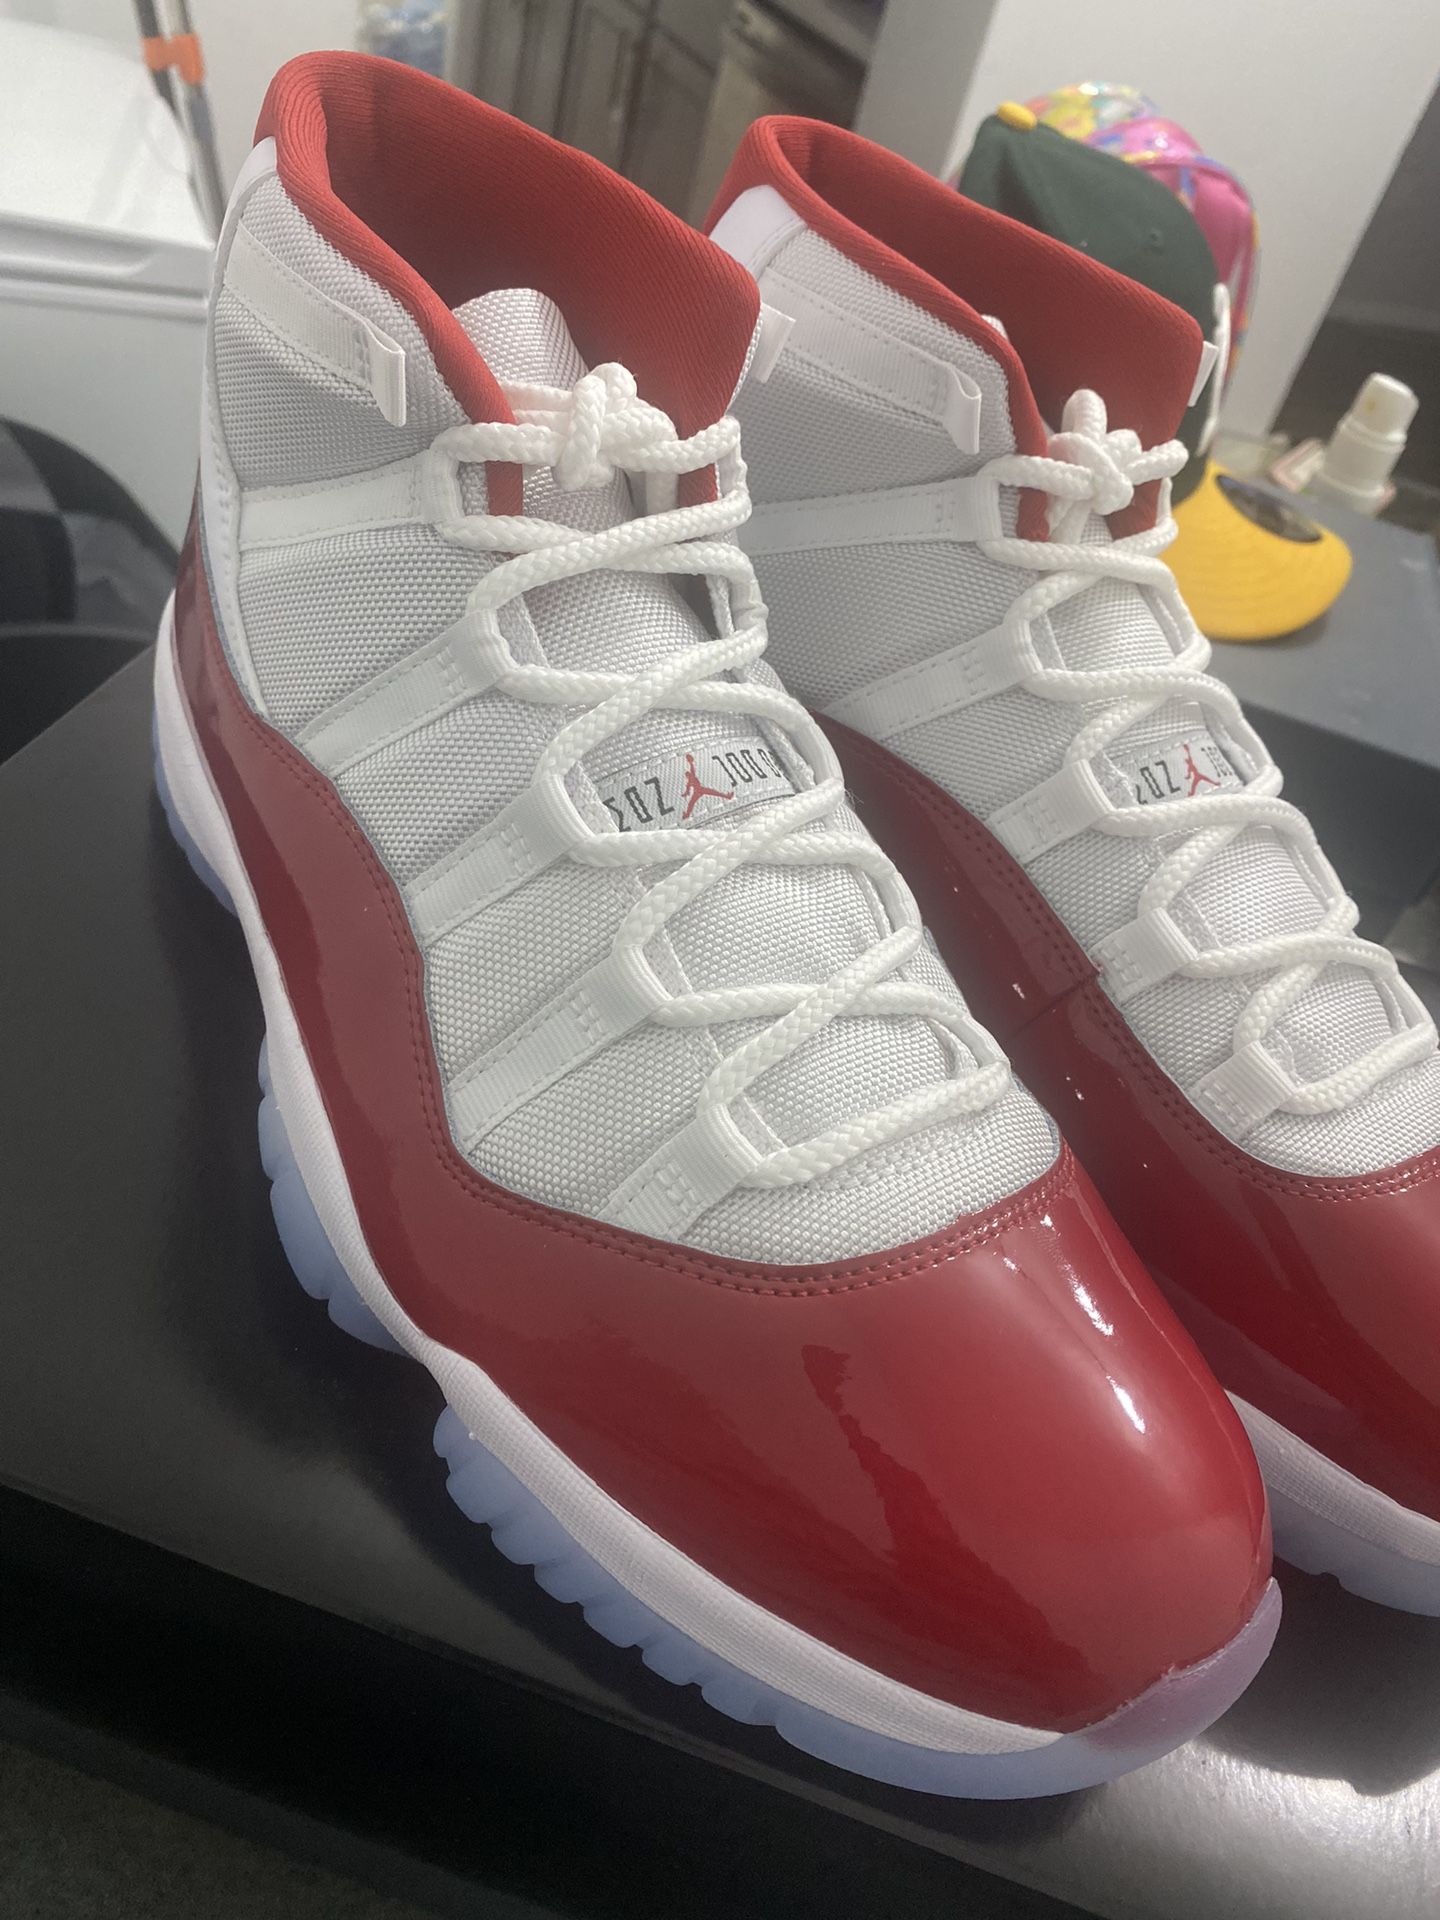 Cherry Red Jordan 11s 